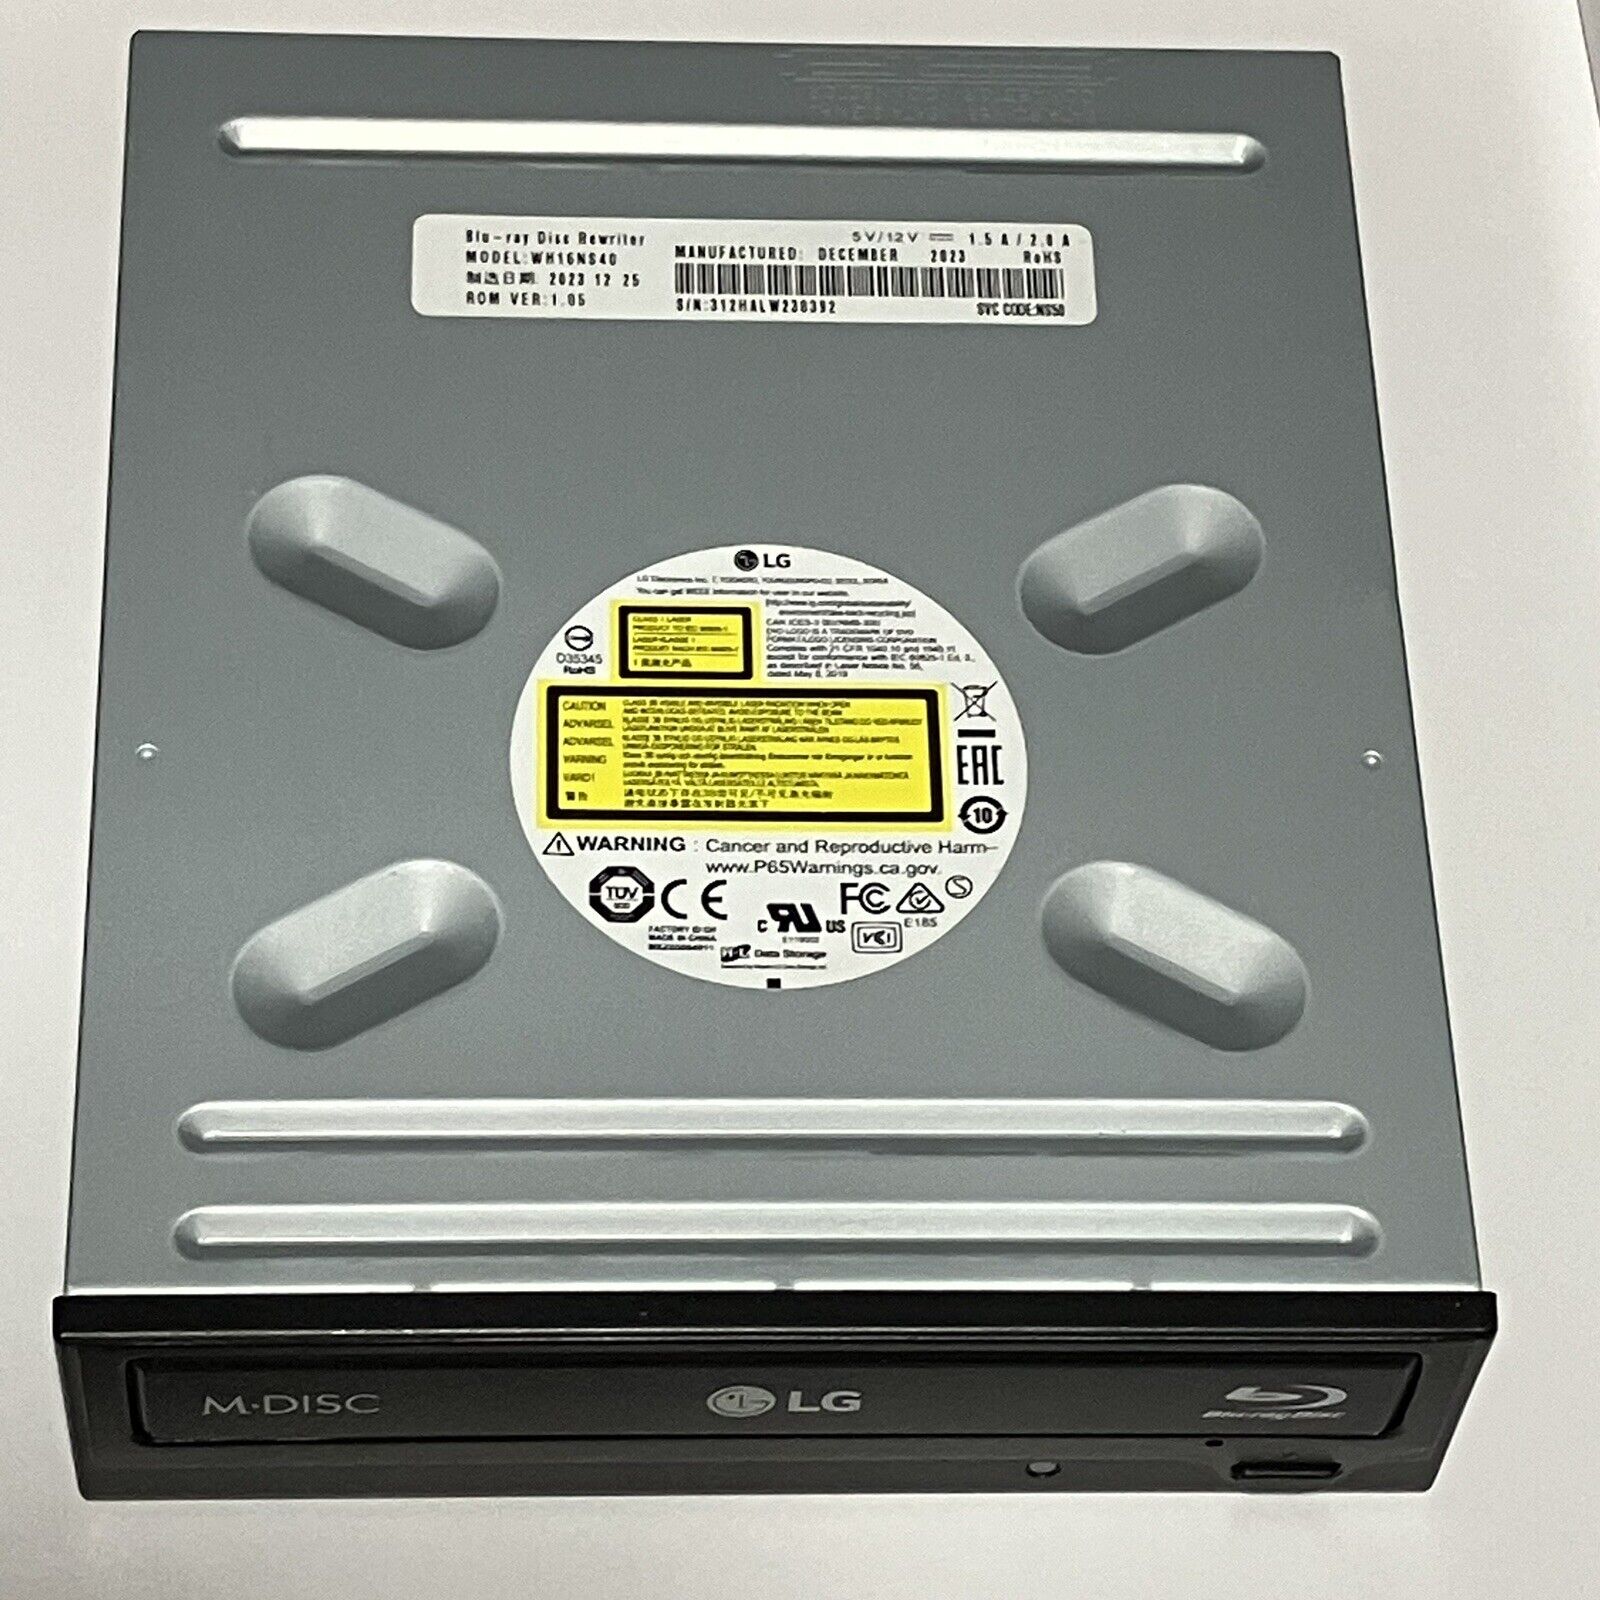 LG WH14NS40 14X Blu-ray SATA M-DISC CD DVD Internal Burner 3D BDXL Drive Writer